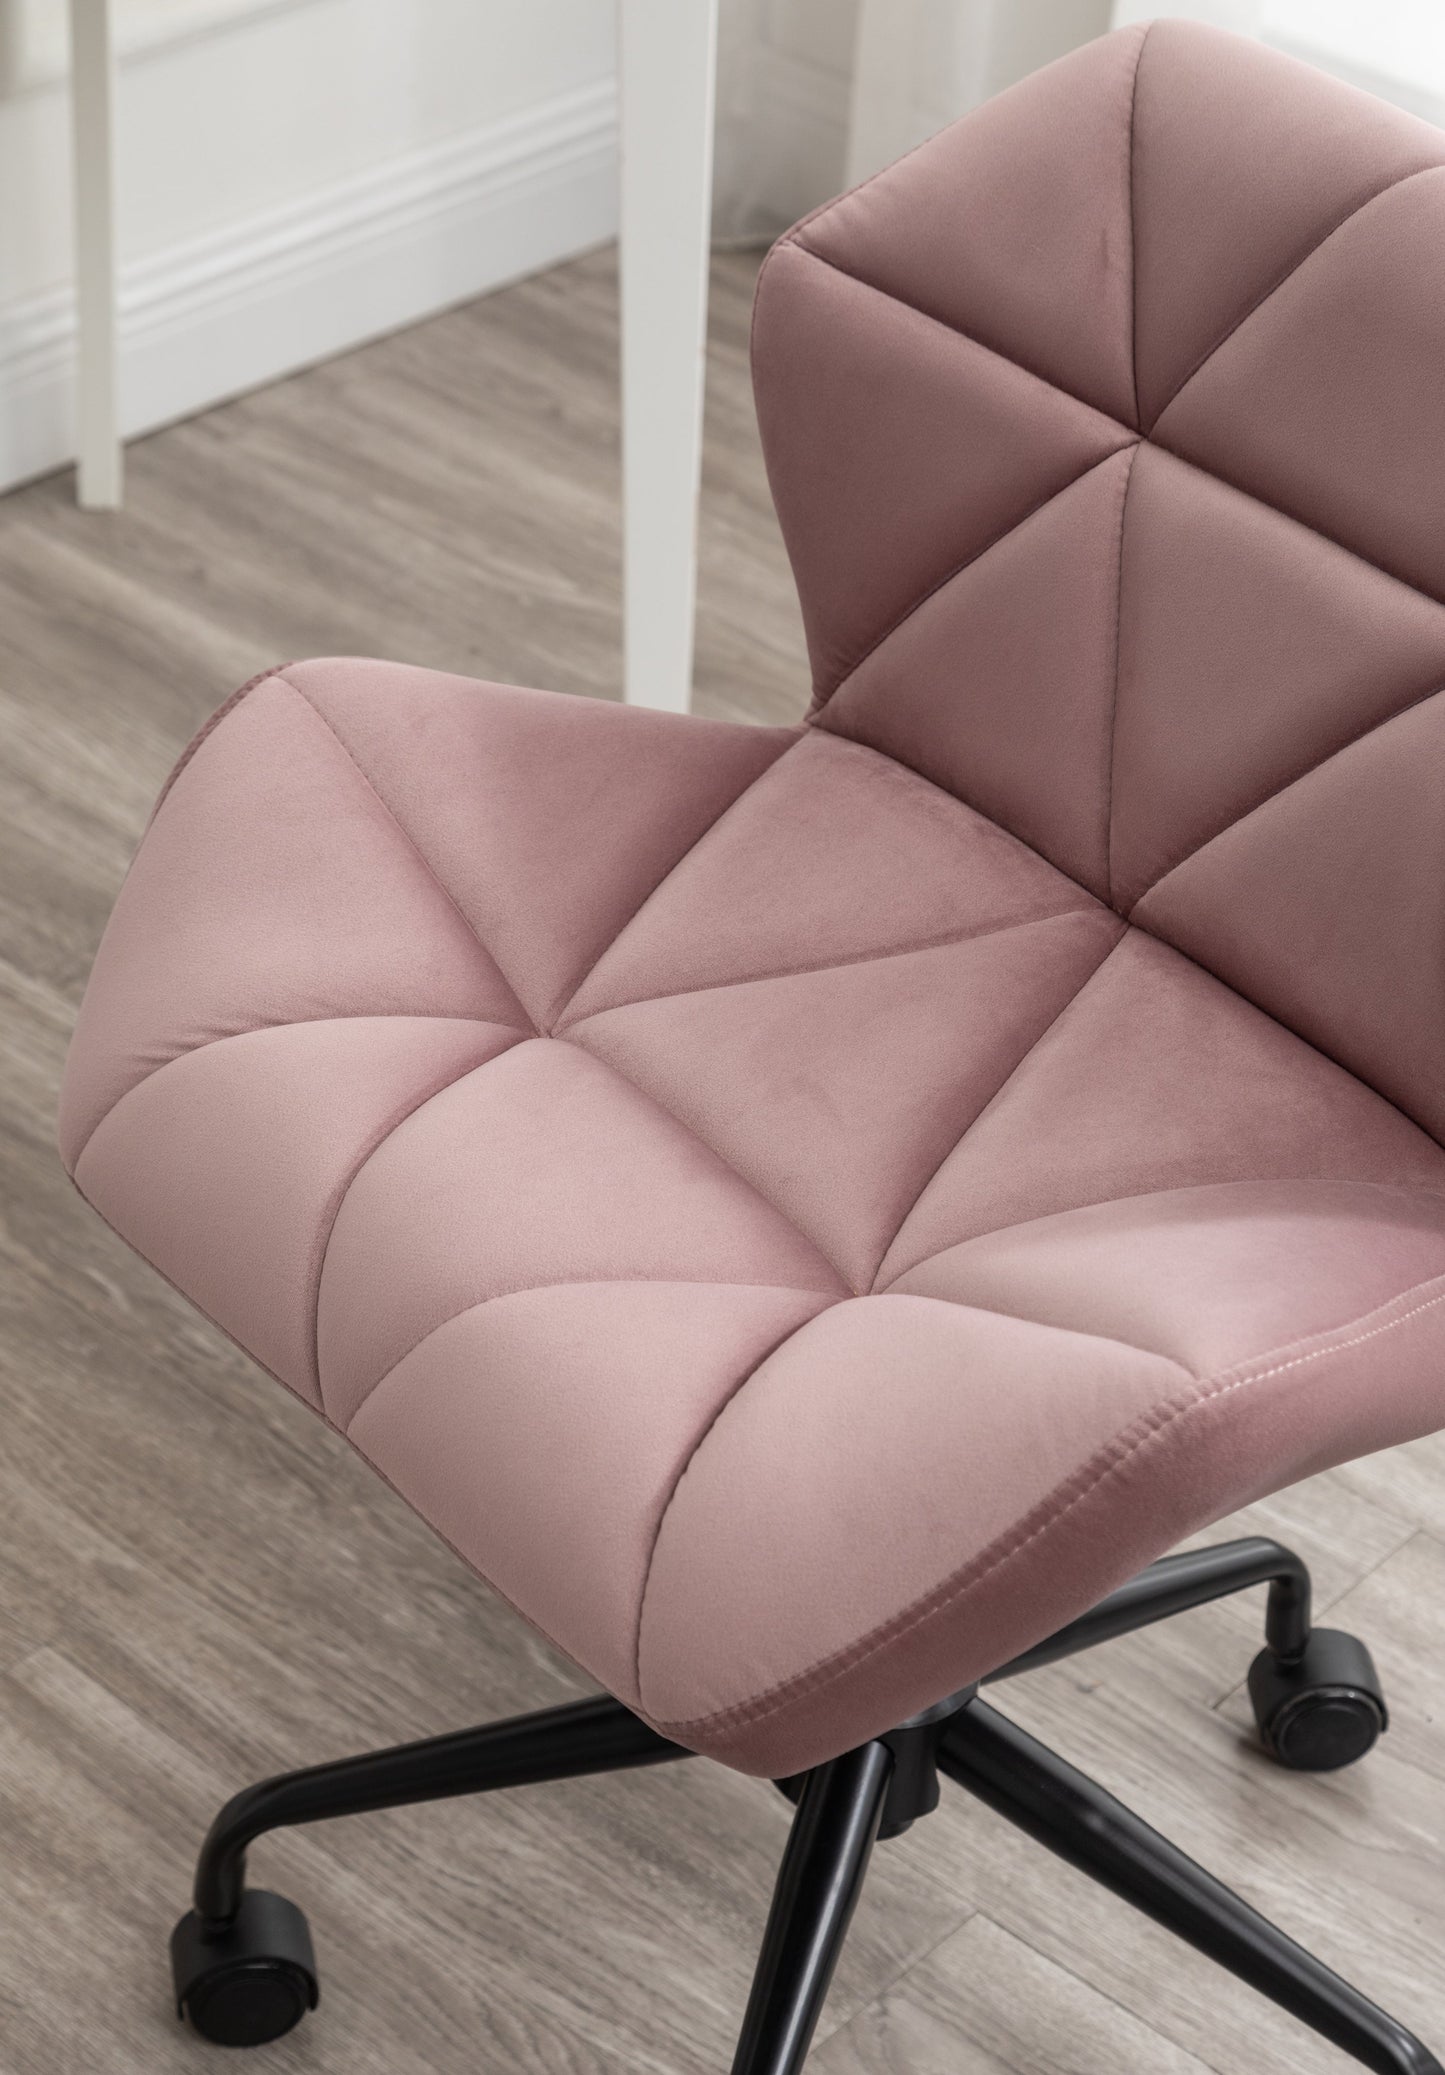 Eldon Diamond Tufted Adjustable Swivel Office Chair, Mauve